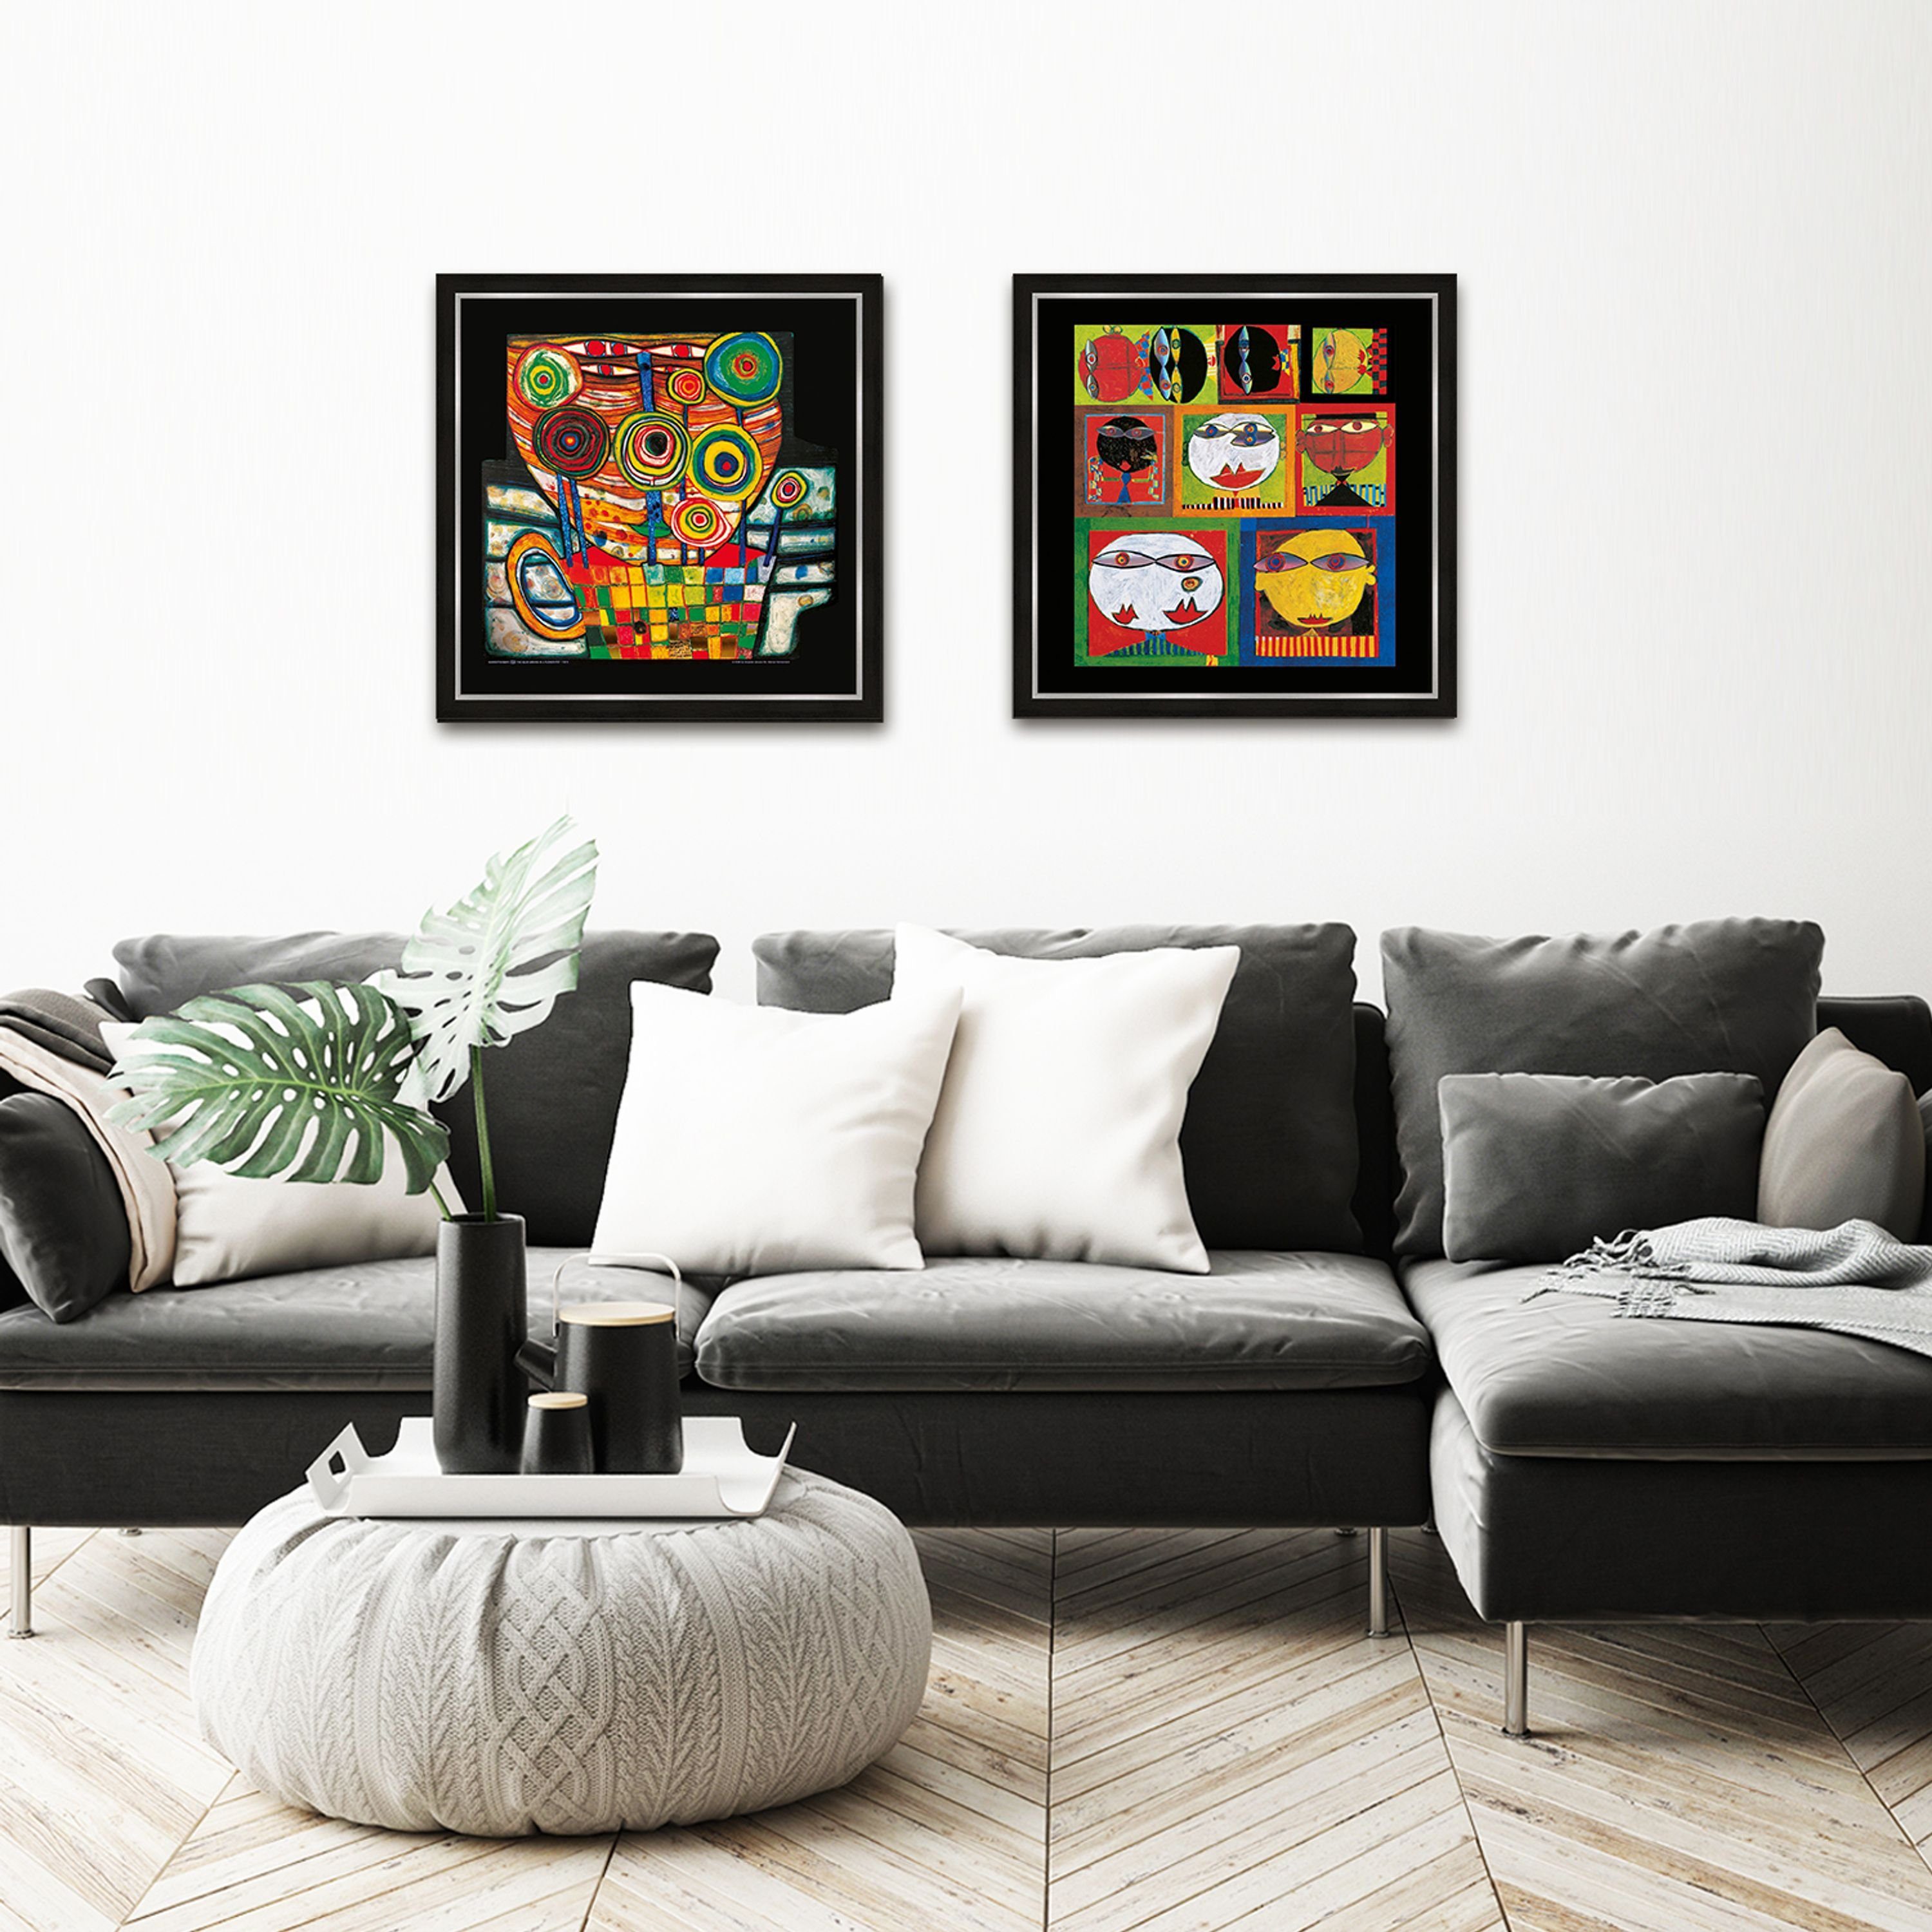 Bild Hundertwasser 53x53cm / gerahmt Wandbild Rahmen mit artissimo mit Rahmen Poster Bild /